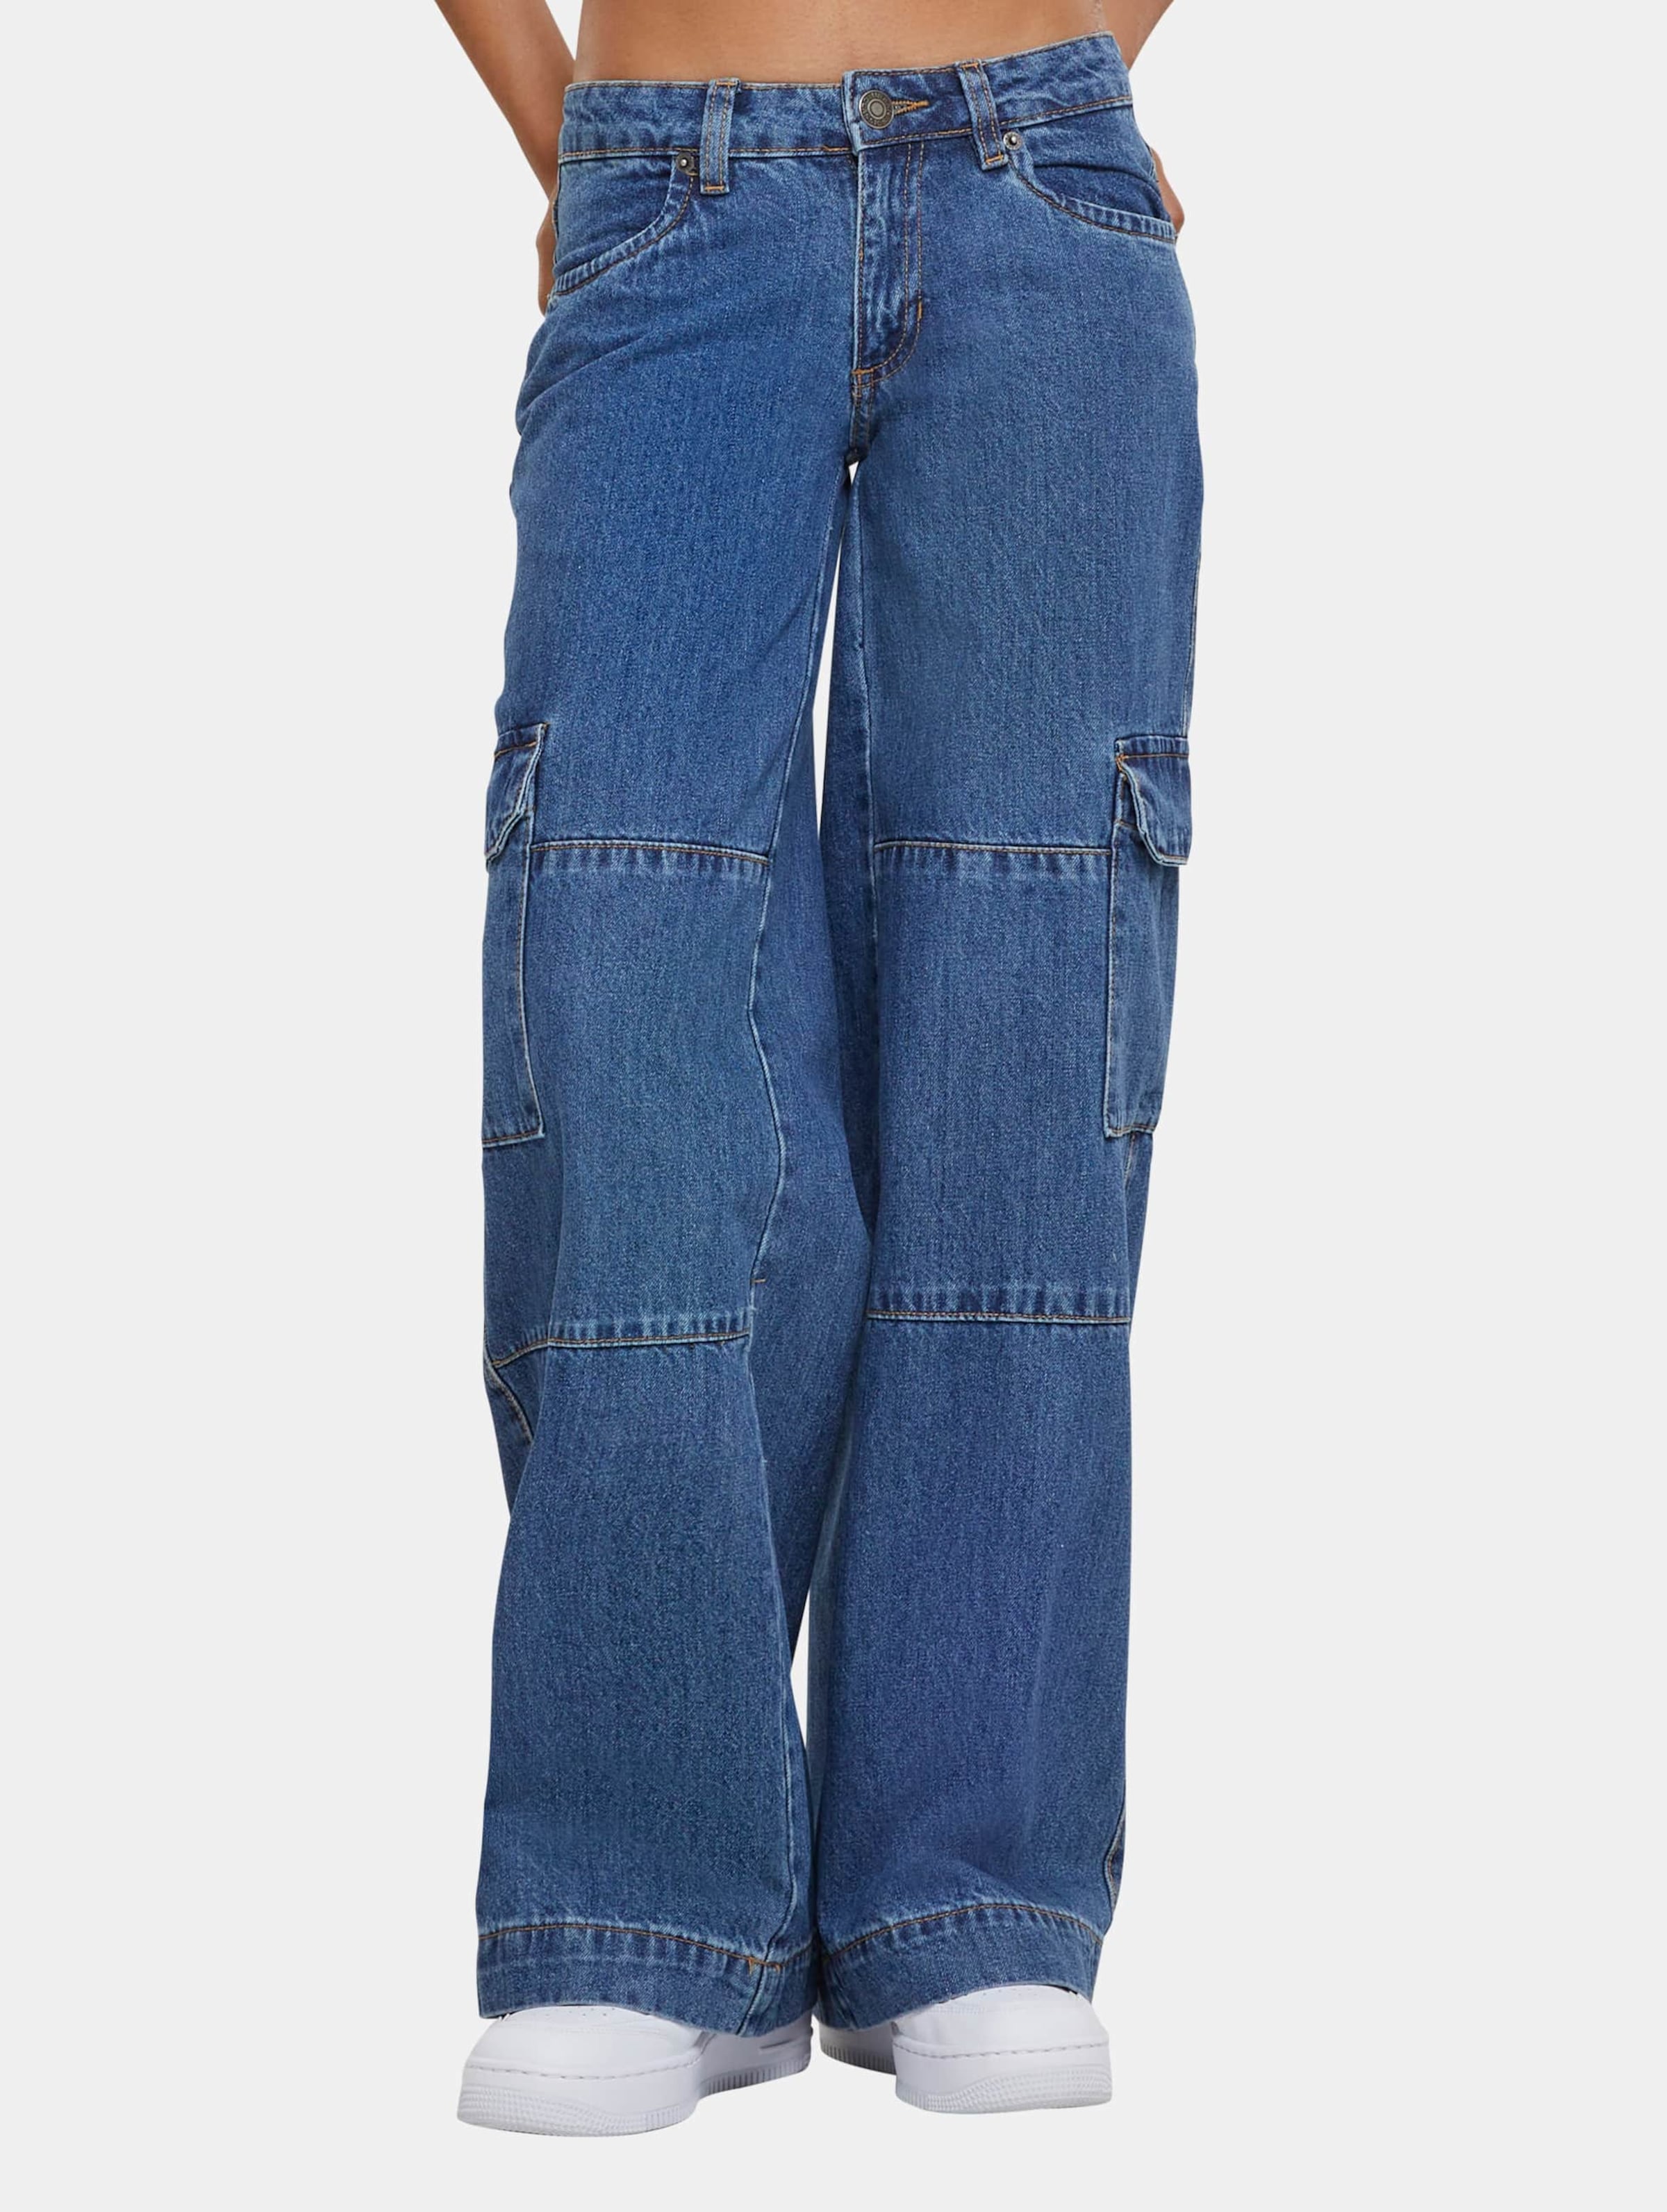 Urban Classics - Low Waist Denim Cargo trousers - Taille, 26 inch - Donkerblauw